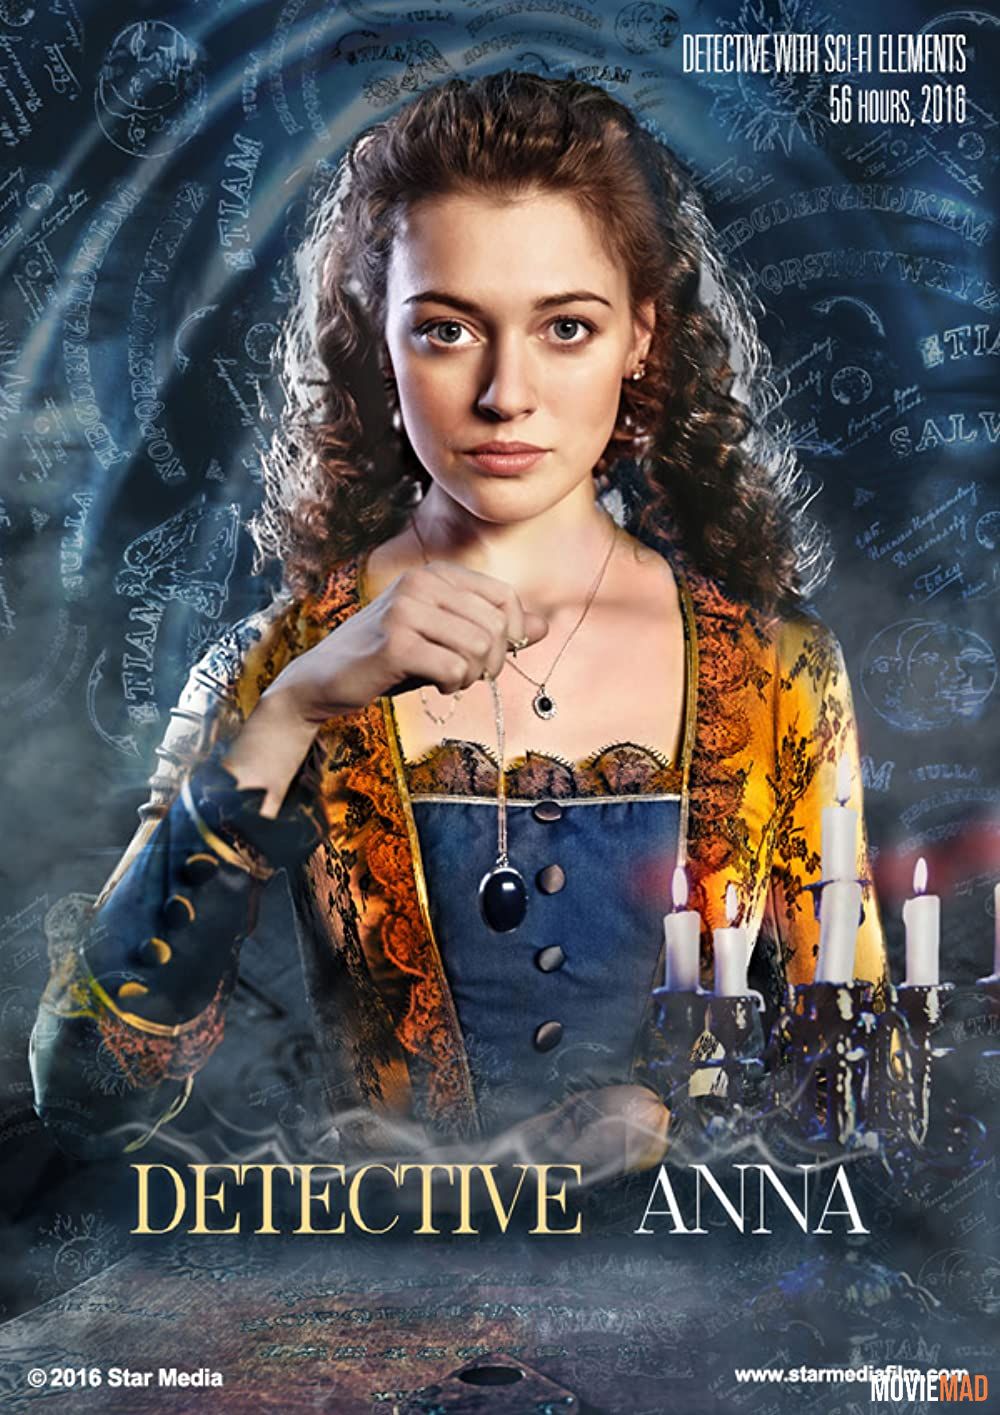 Detective Anna S01 (E09-16) Hindi Dubbed WEB DL Full Series 720p 480p